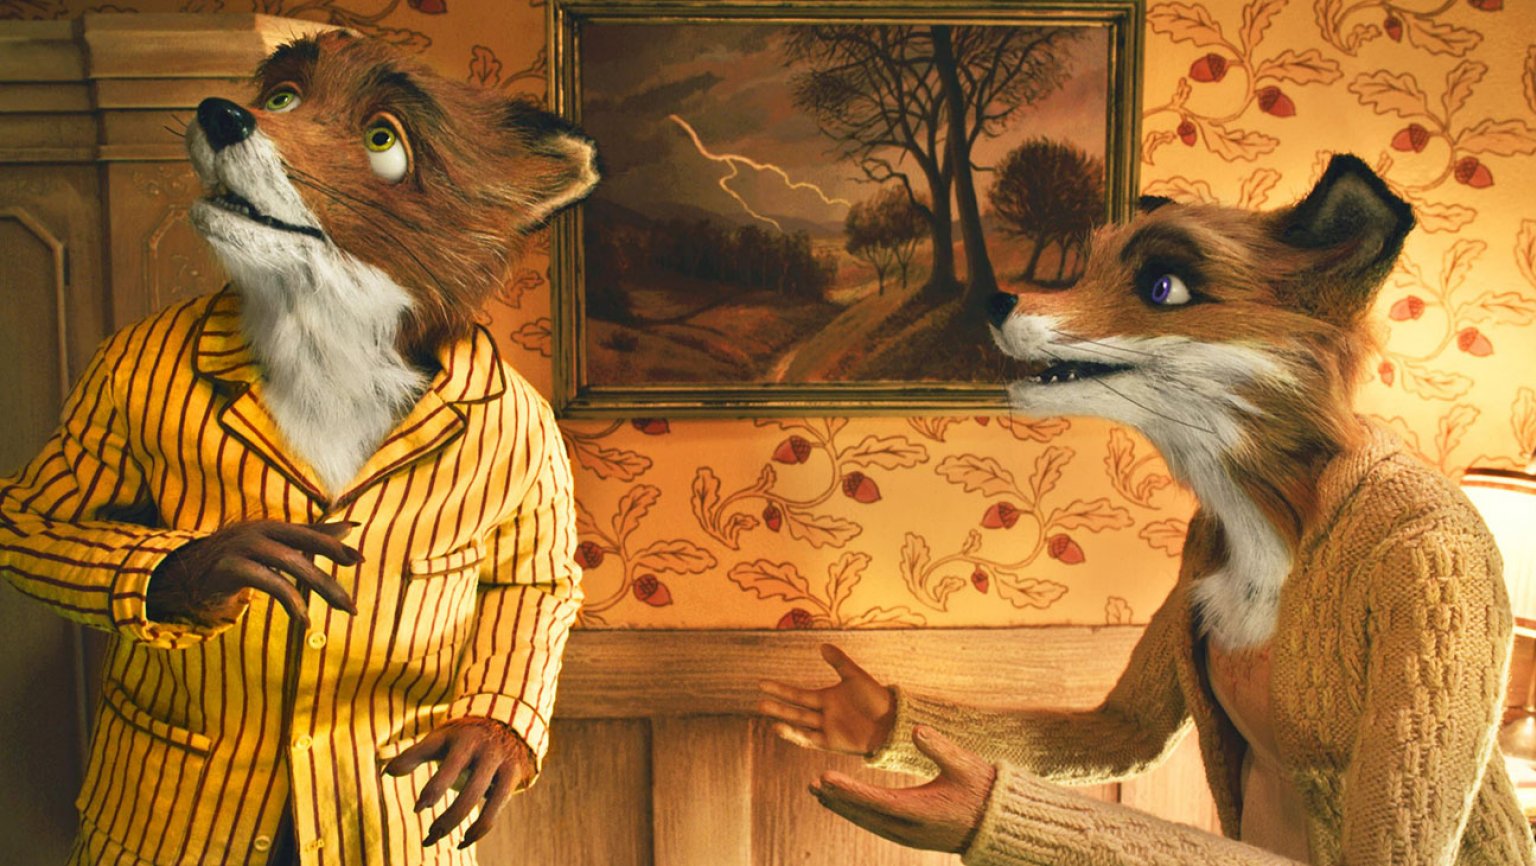 Fantastic Mr. Fox (Image: 20th Century Fox)